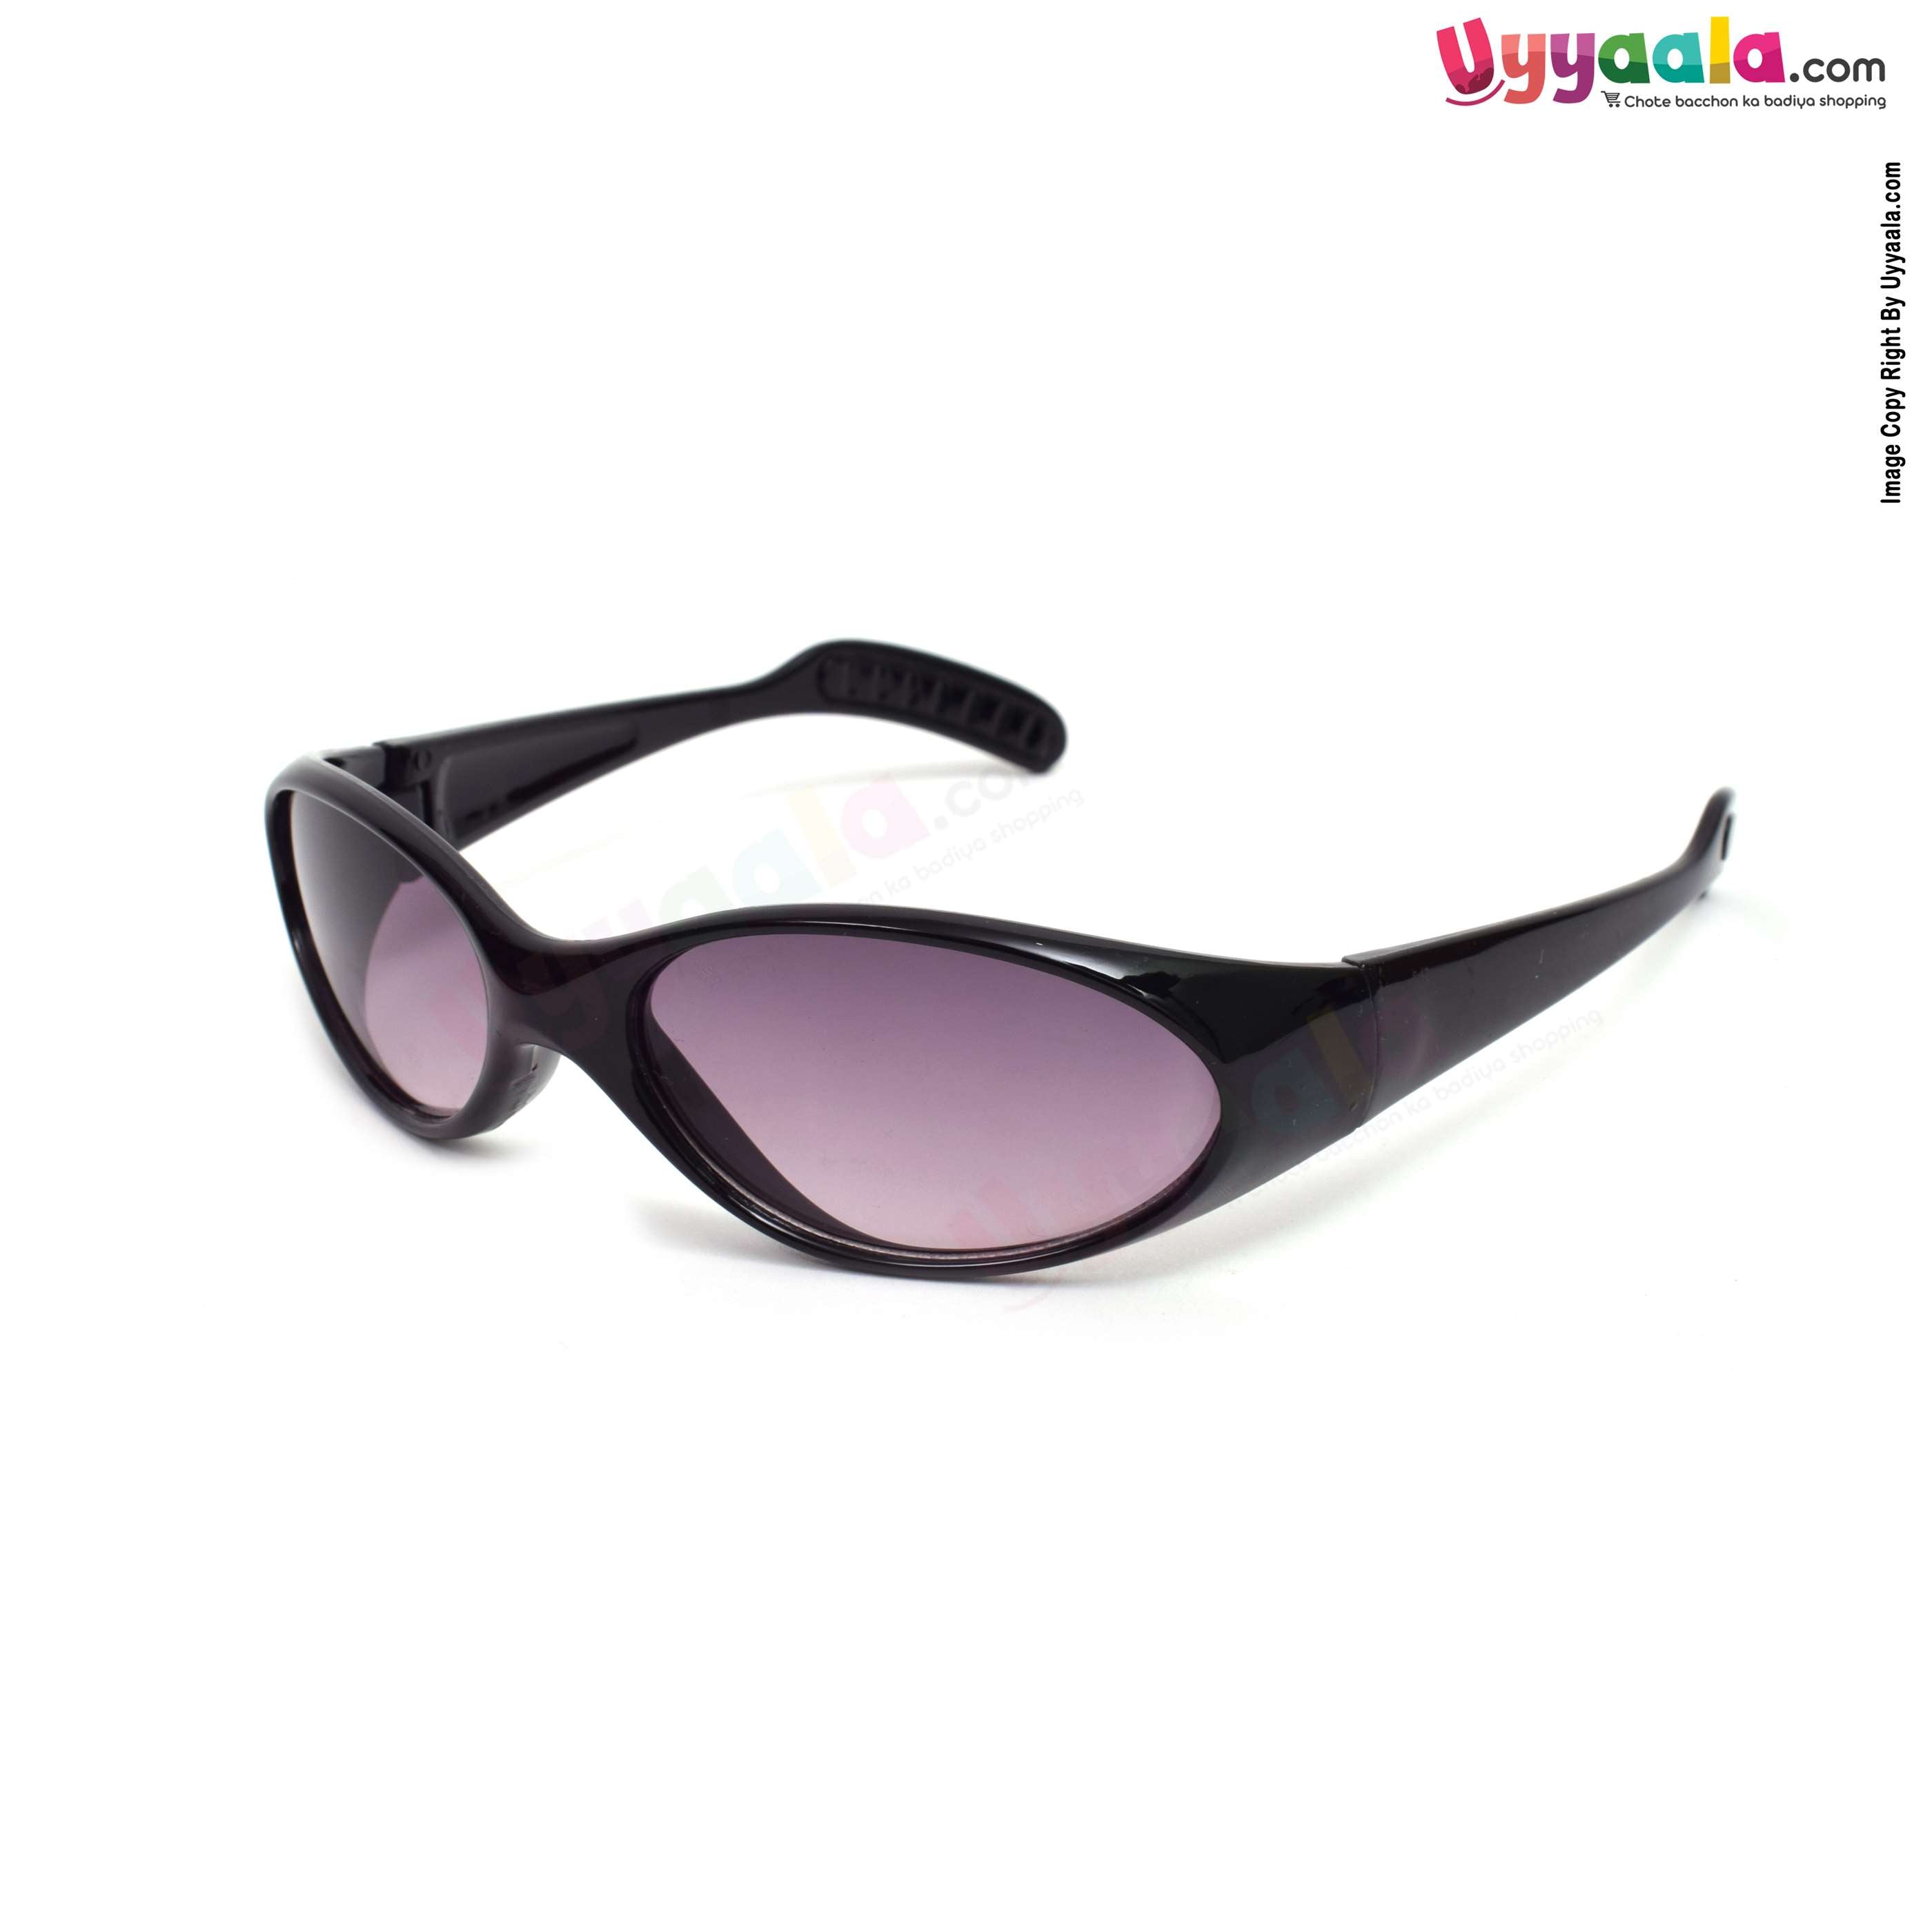 Stylish cat-eye sports sunglasses for kids - black